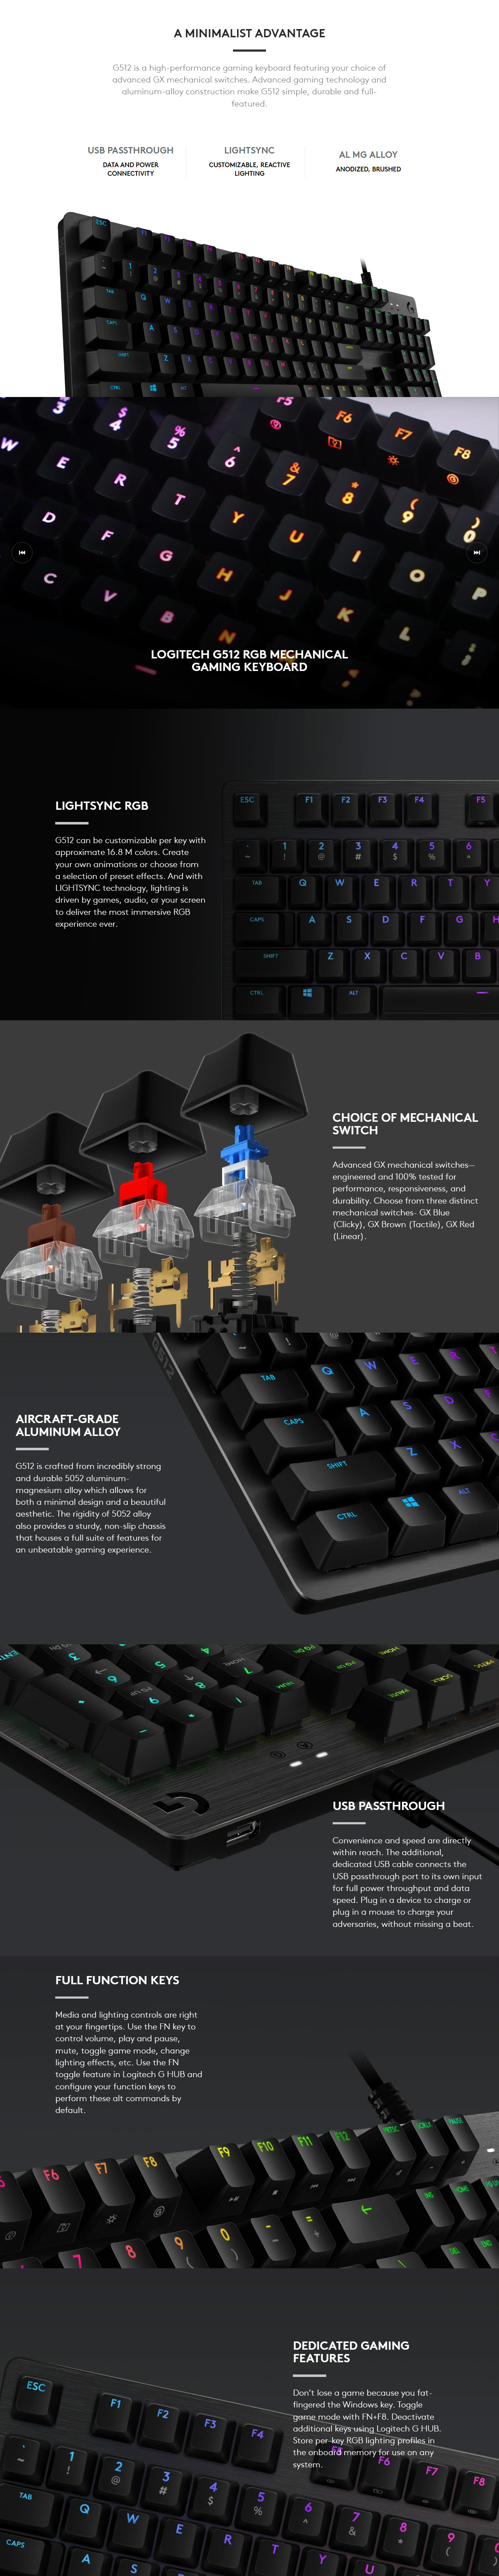 Logitech G512 Carbon RGB Mechanical Gaming Keyboard - GX Blue Switch 